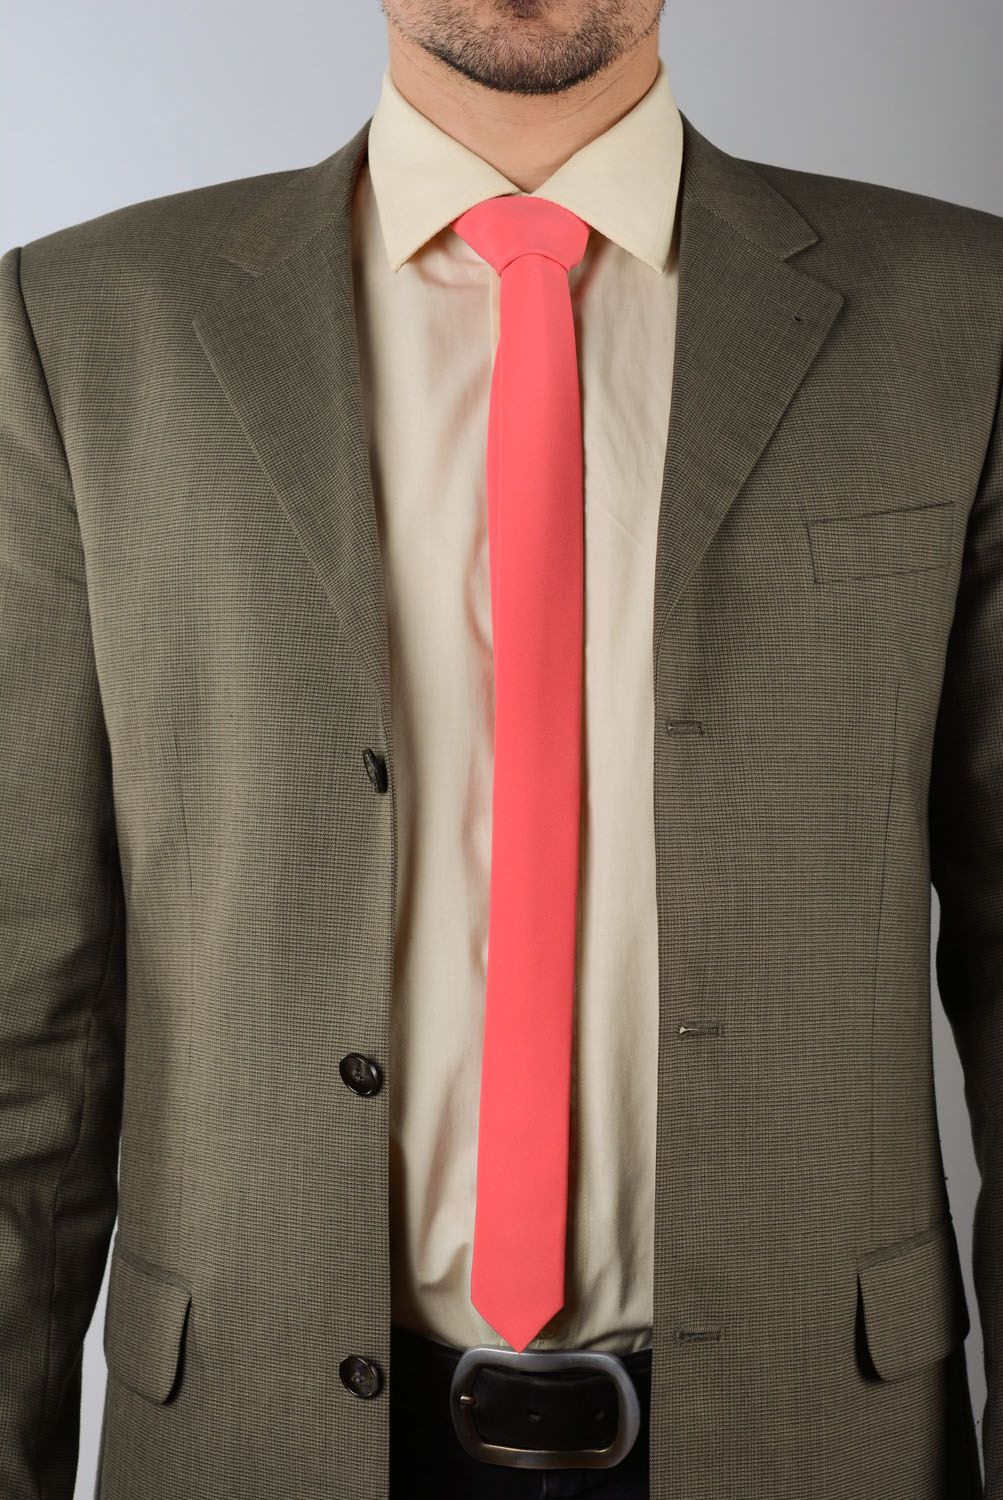 Cravate en gabardine faite main originale photo 1